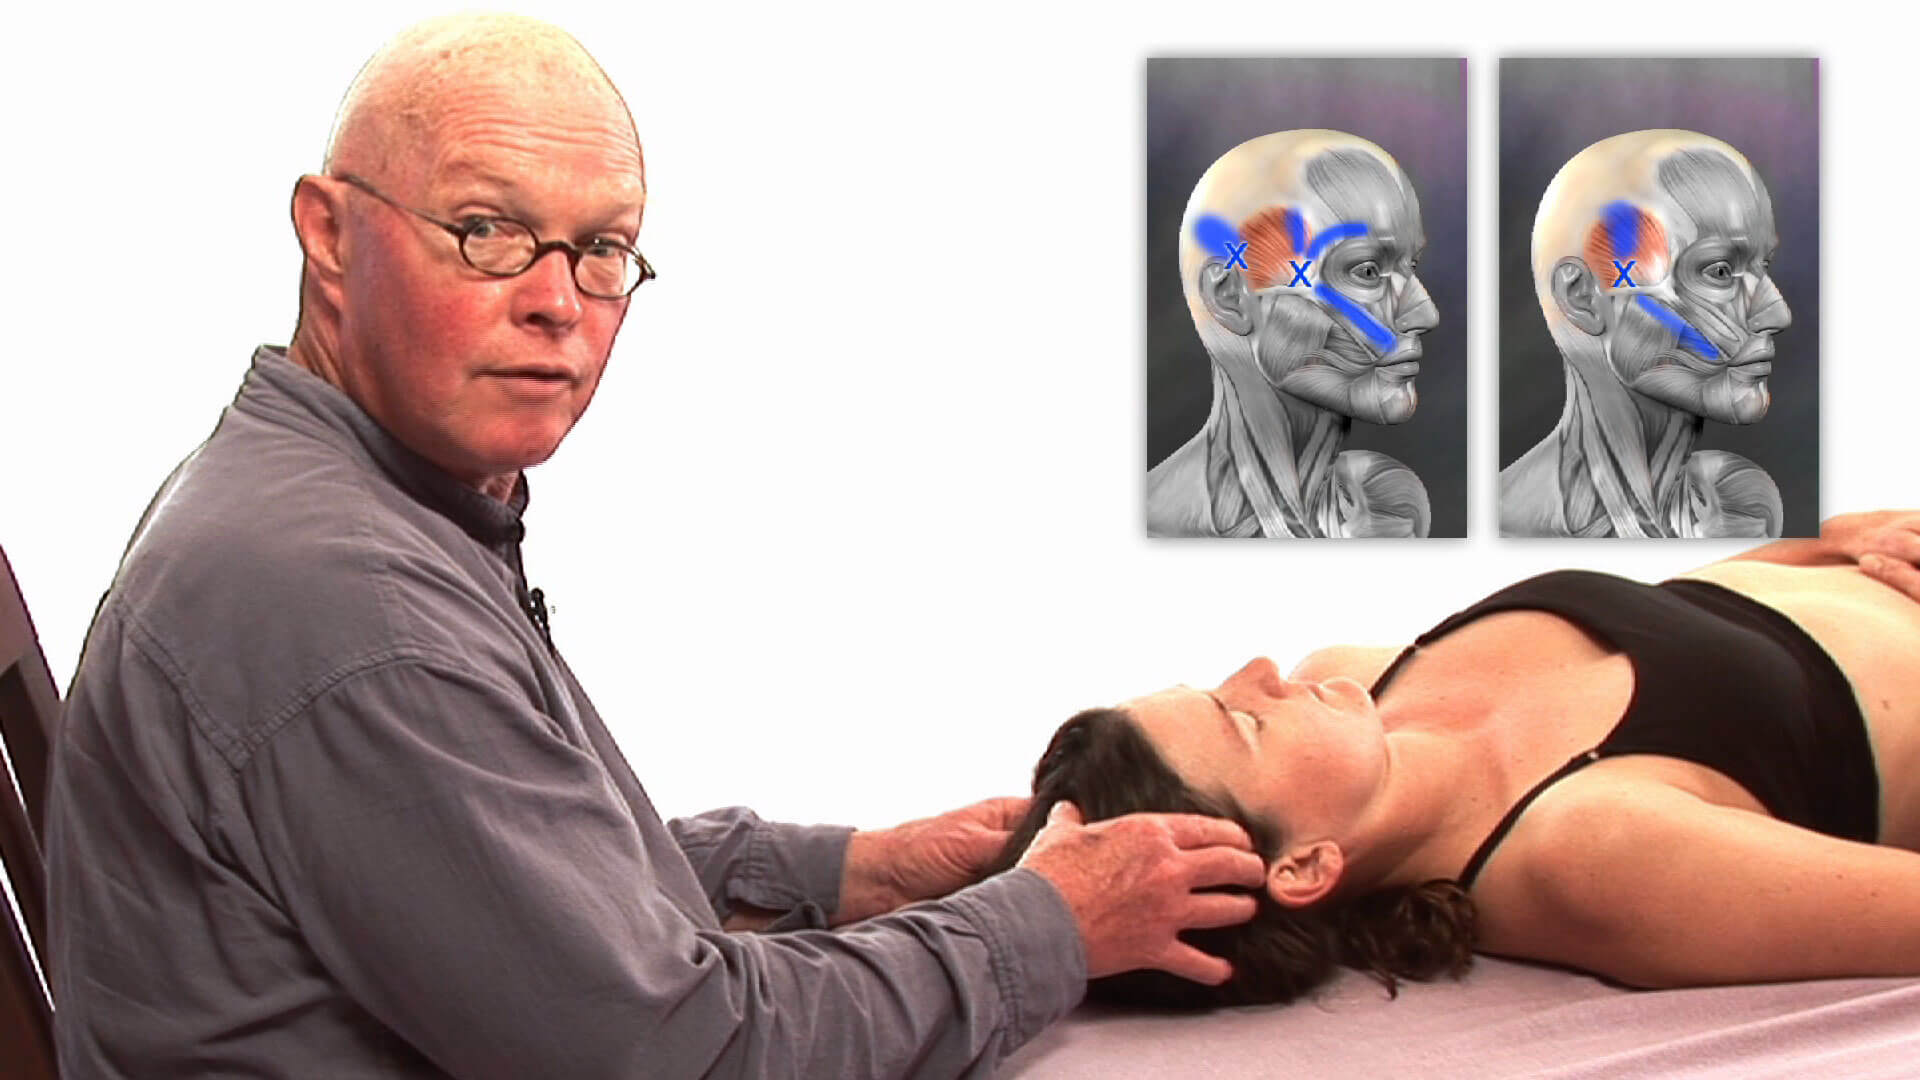 Orthopedic Massage The Upper Body Video on DVD & Streaming Version - Real Bodywork